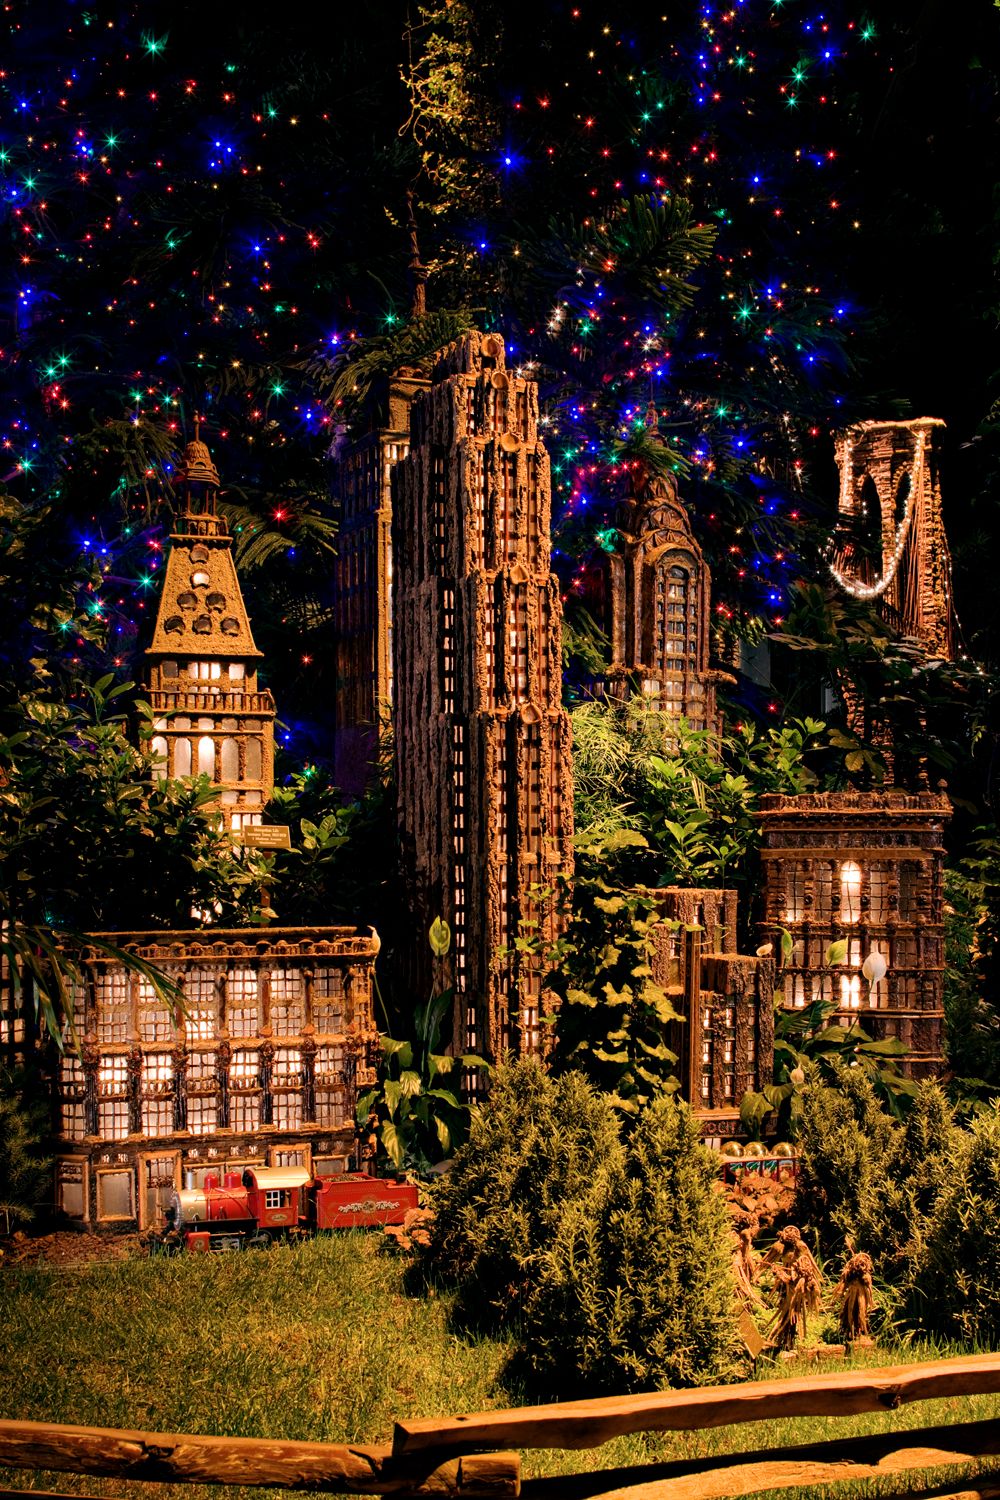 New York Botanical Garden Holiday Train Show 